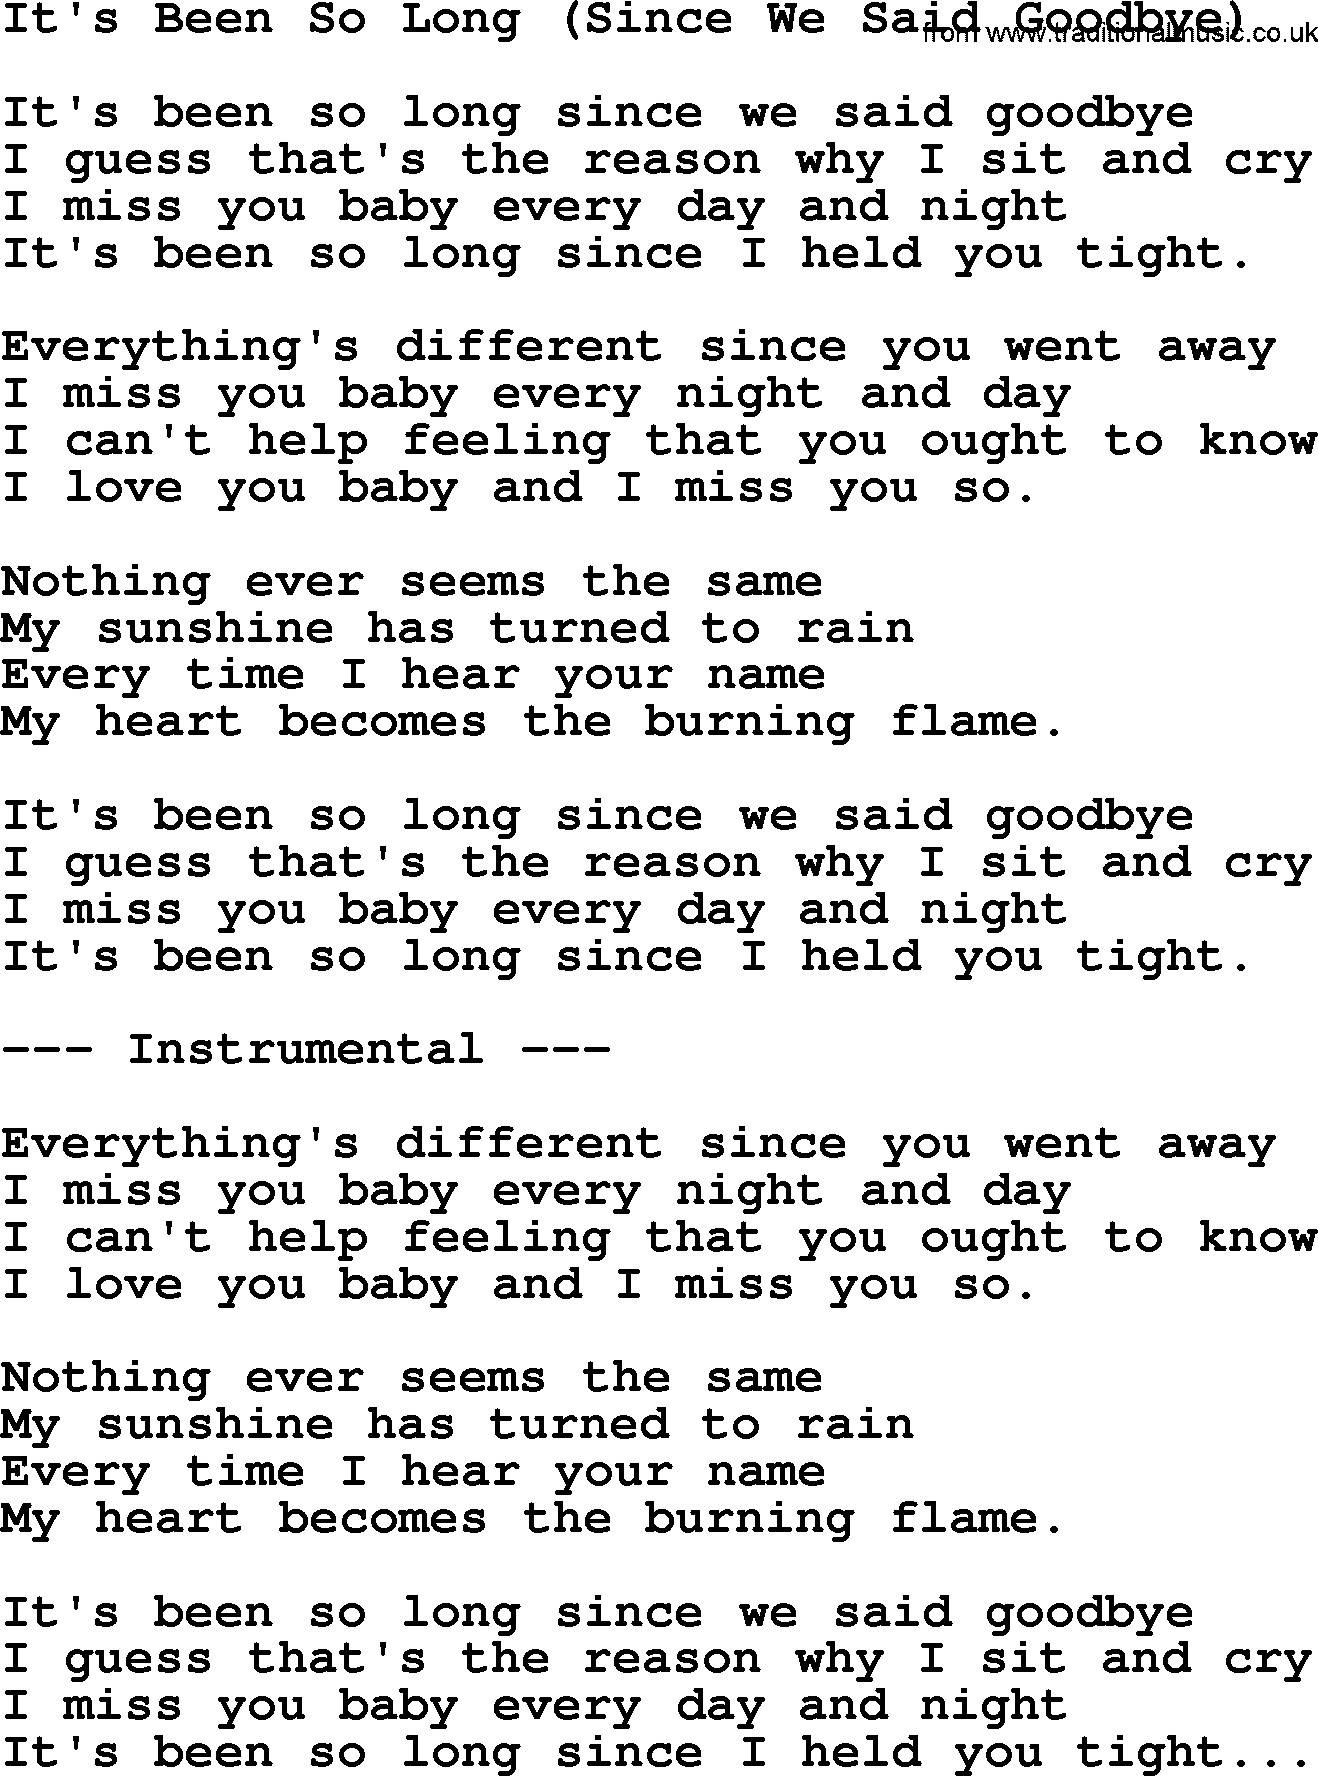 George Jones song: It's Been So Long (since We Said Goodbye), lyrics